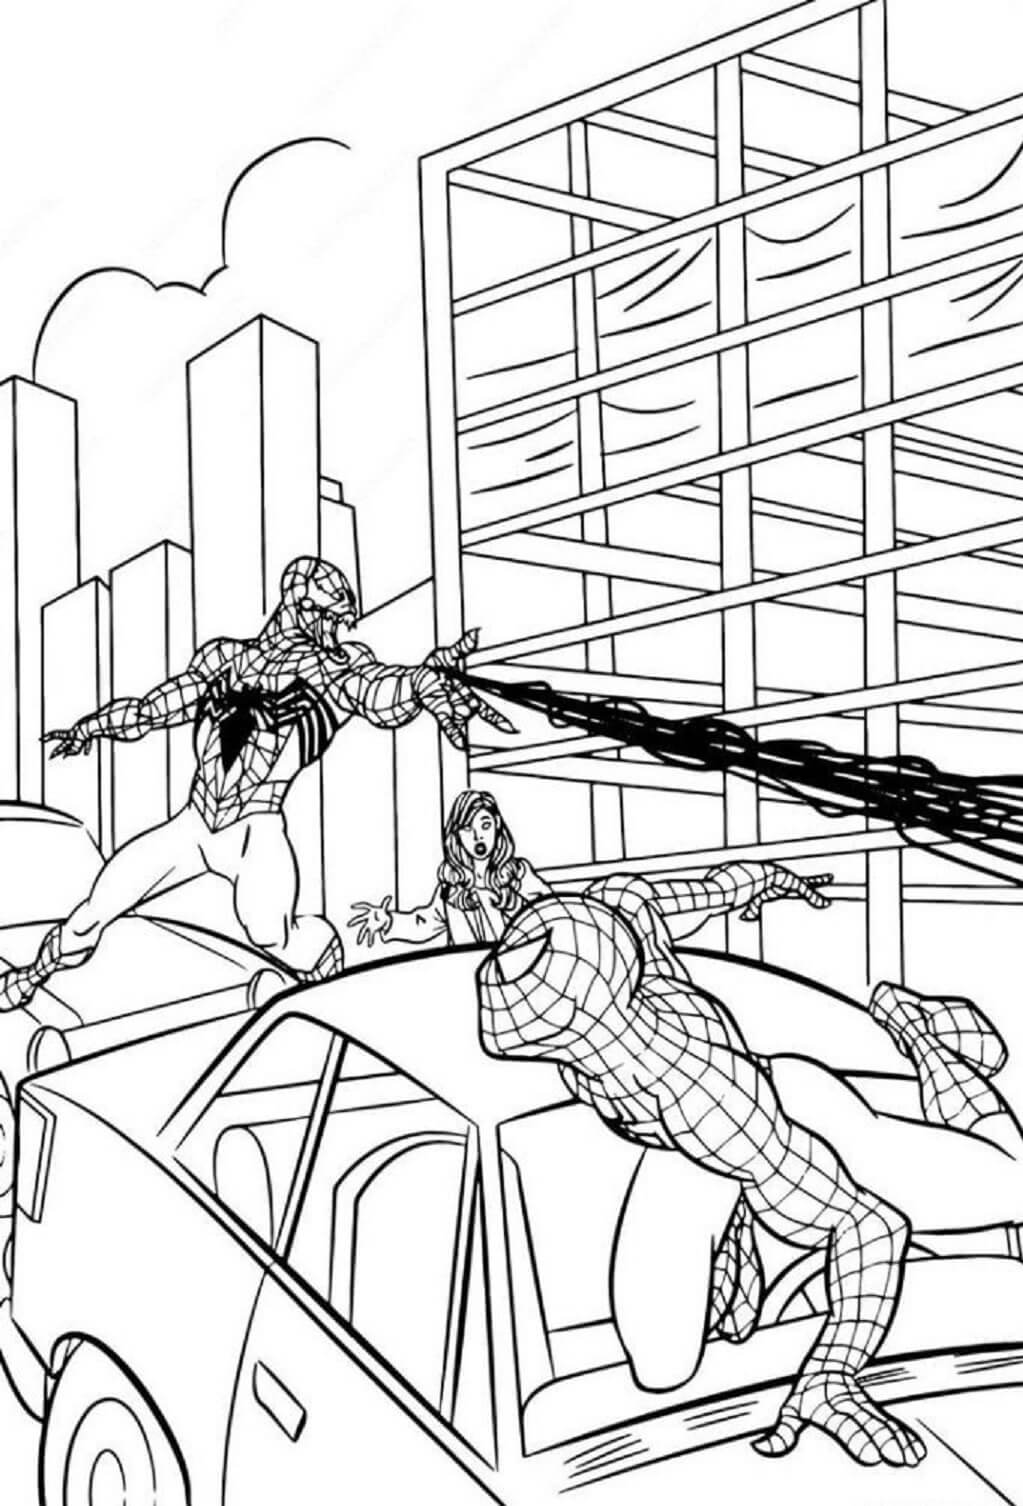 Kolorowanka Venom Atakuje Spider-Mana w Mieście